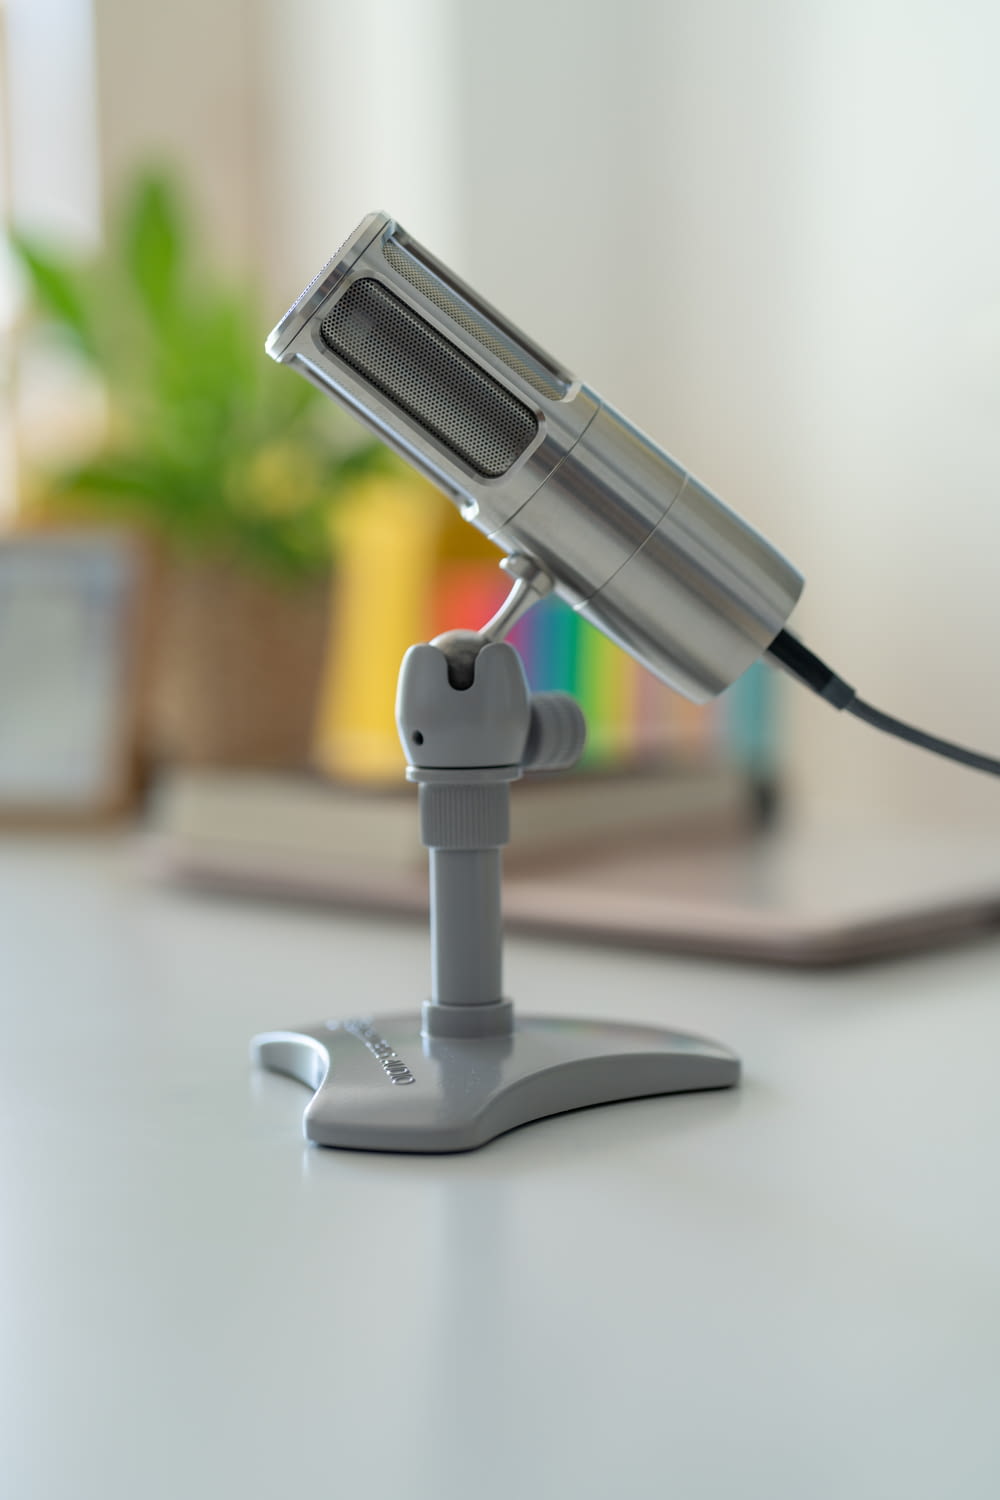 a microscope on a table